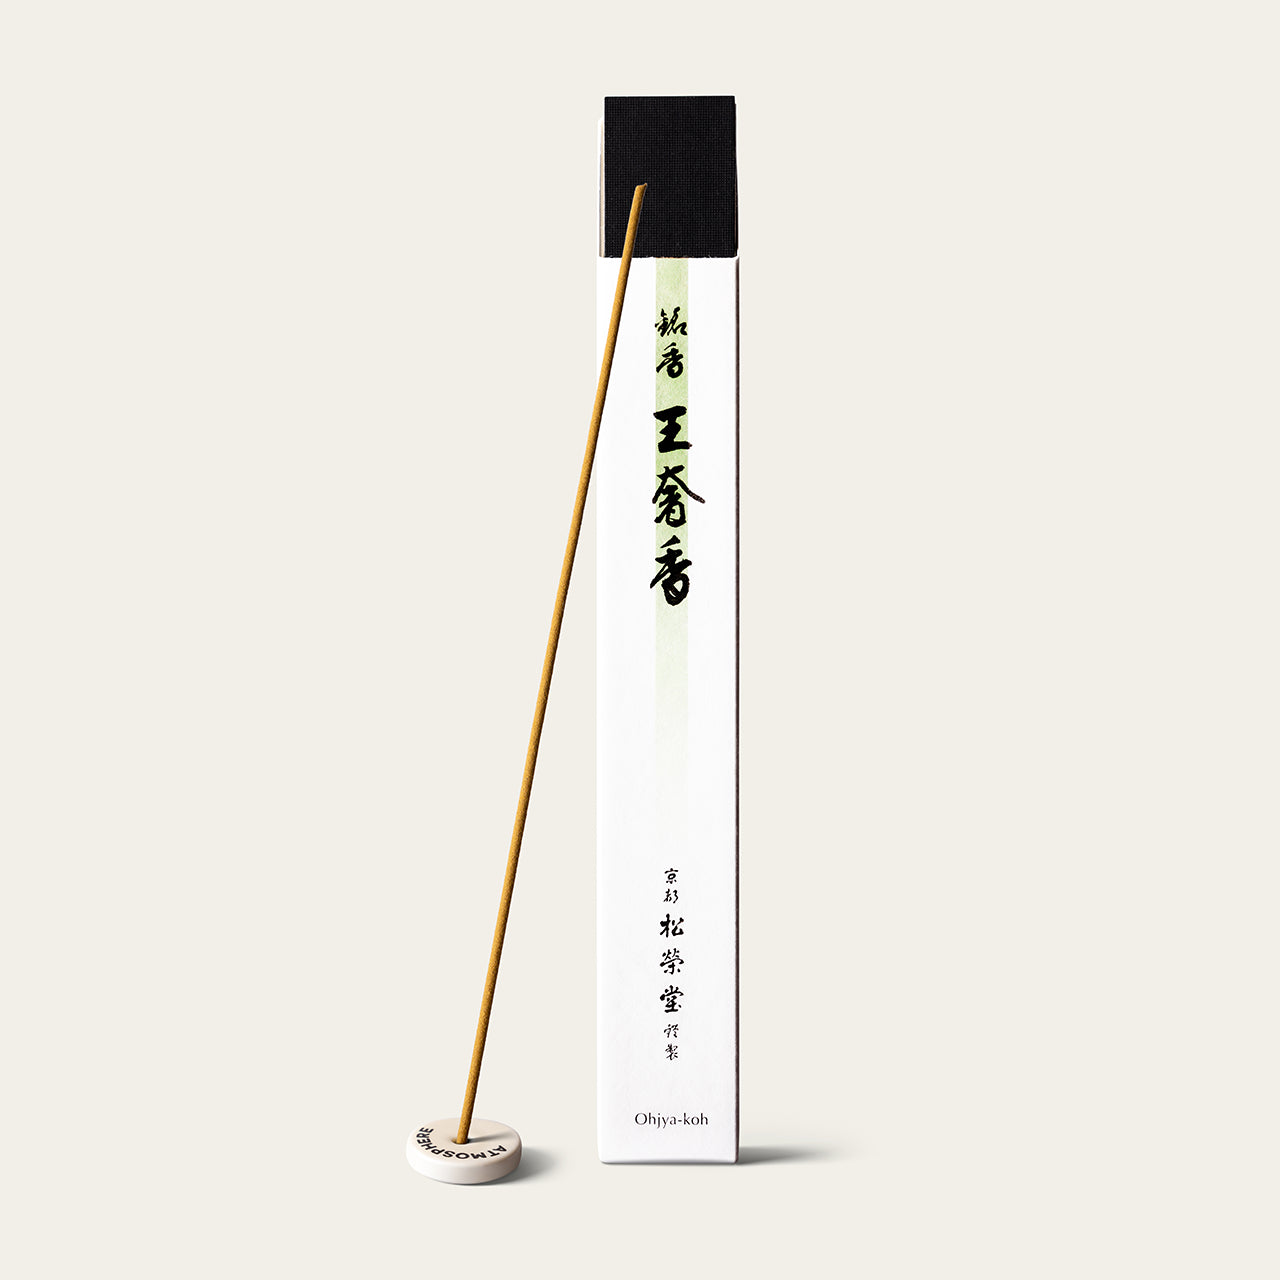 Shoyeido Premium King's Aroma · Ohjya-koh Japanese incense sticks (36 sticks) with Atmosphere ceramic incense holder